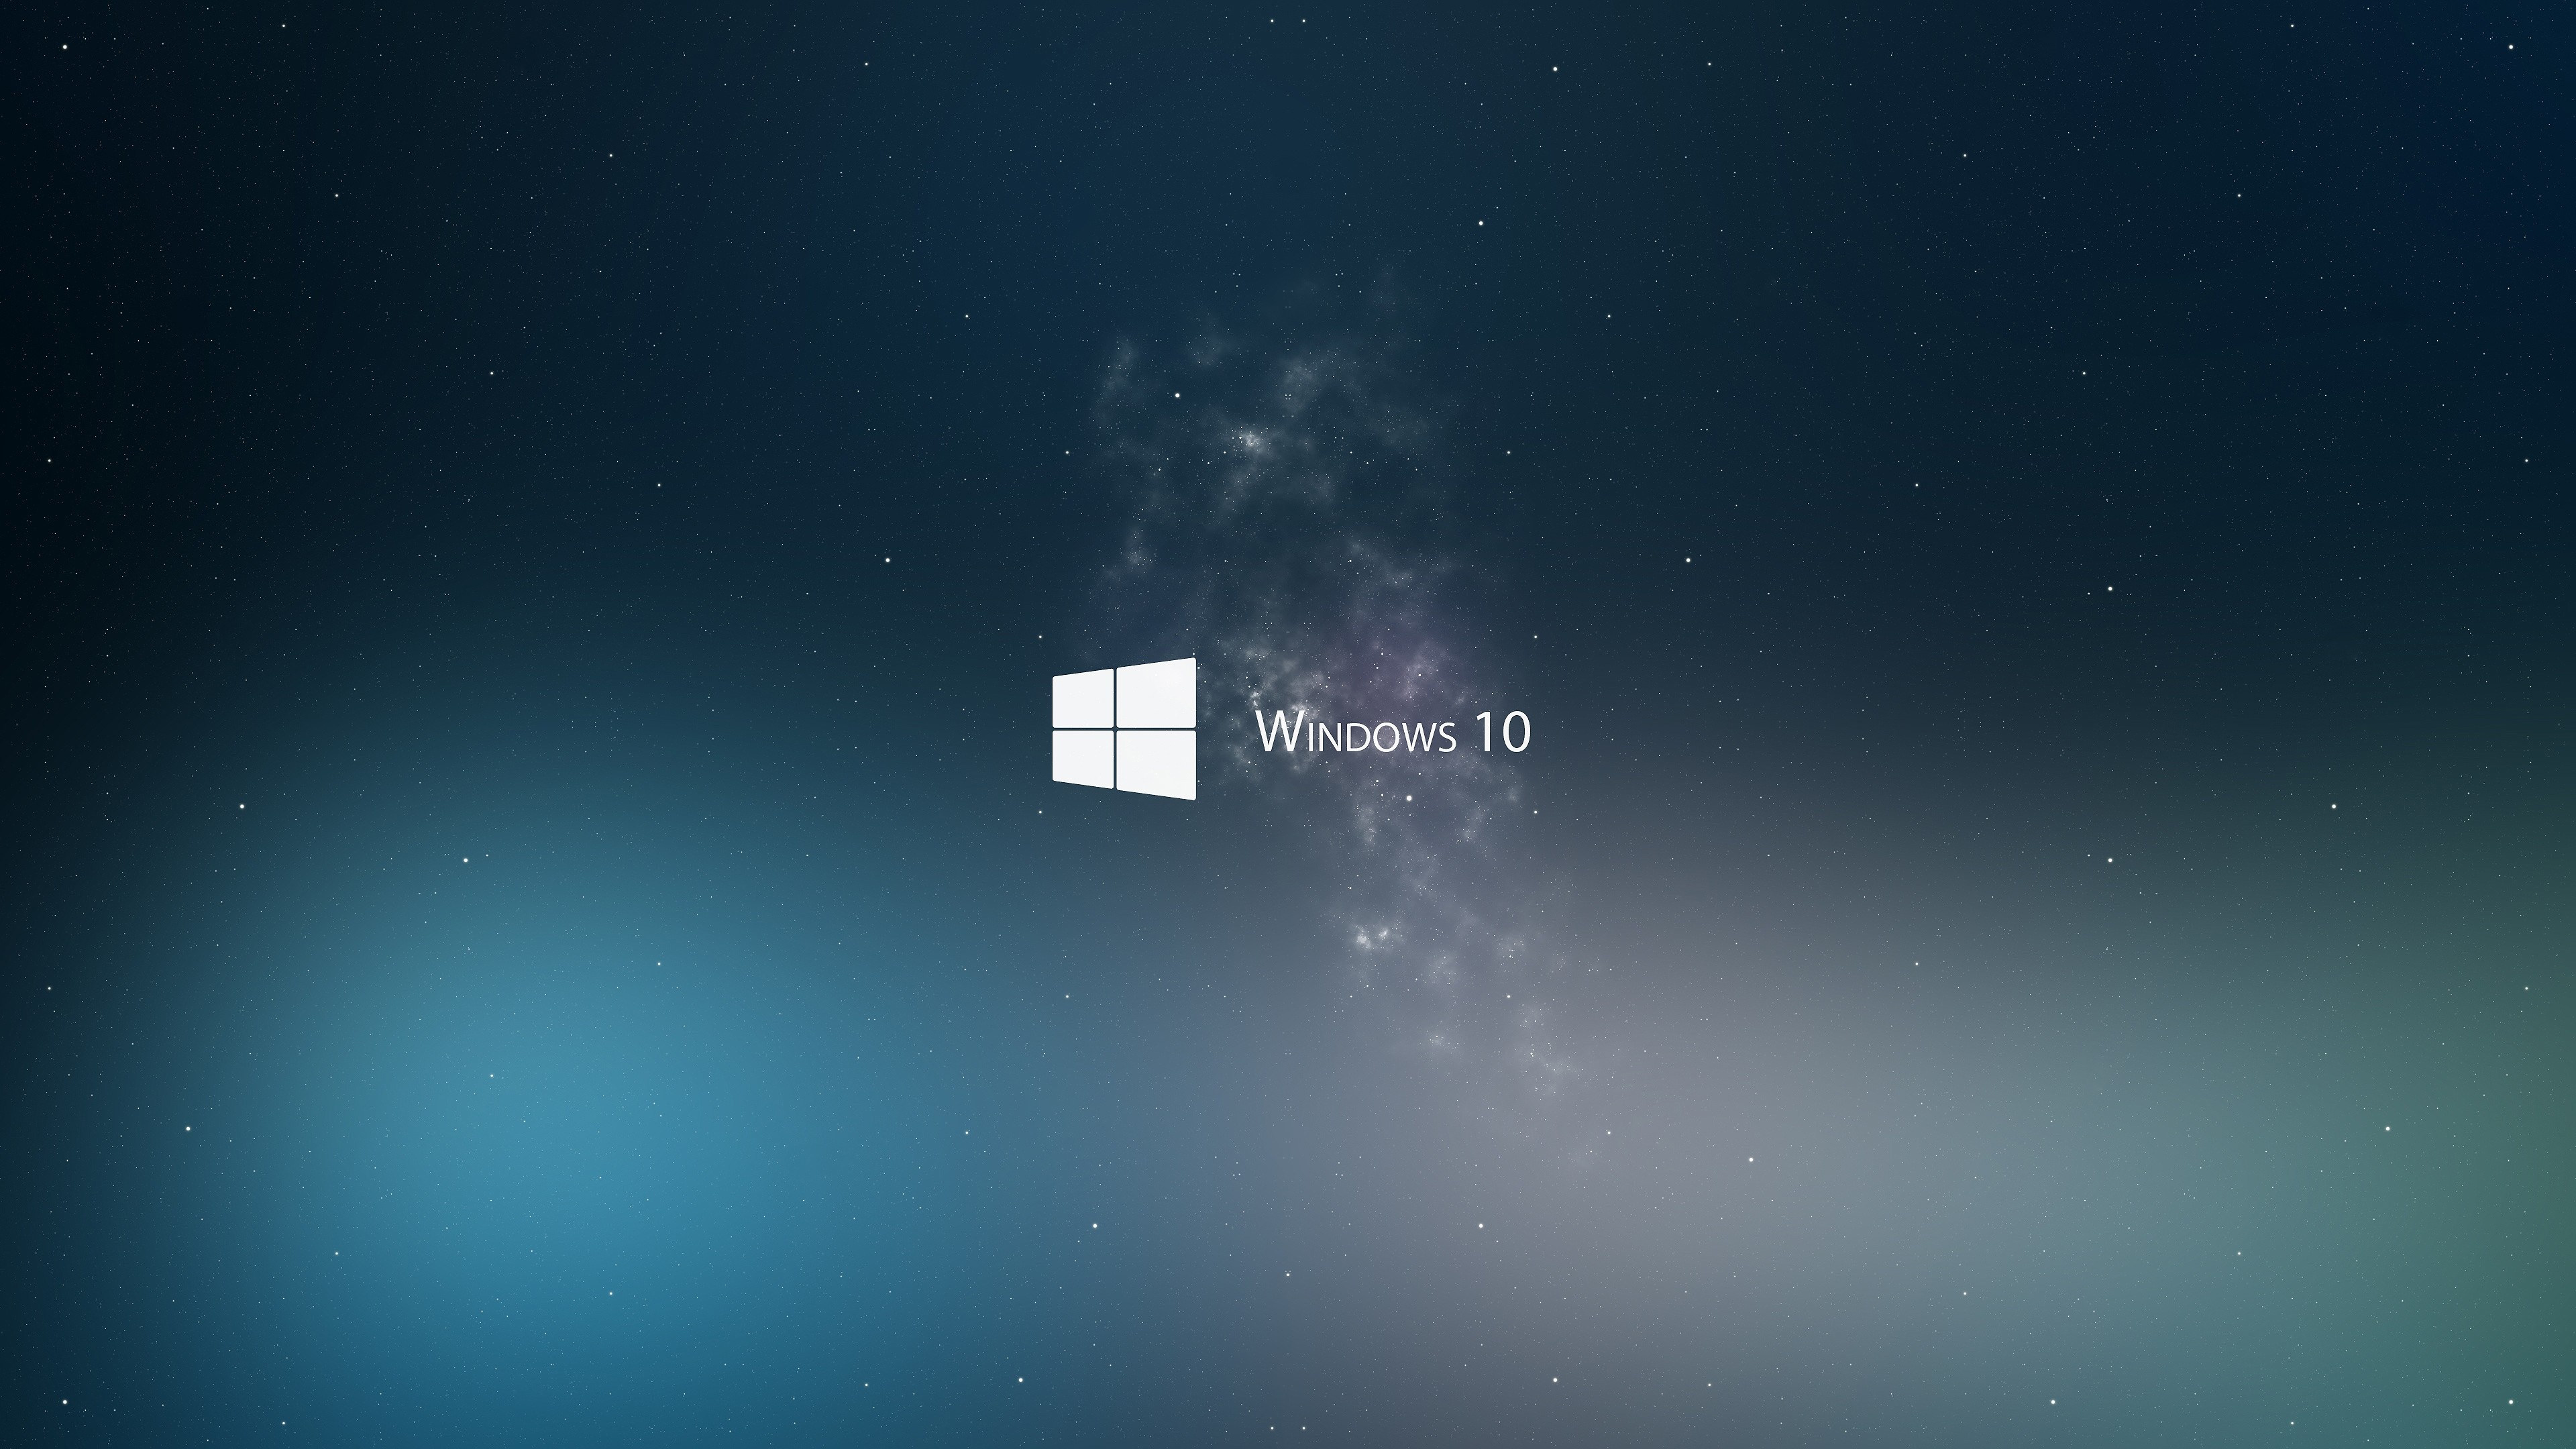 3840x2160 Live Wallpapers For Windows 10 - Wallpapersafari in Wallpaper Windows 10